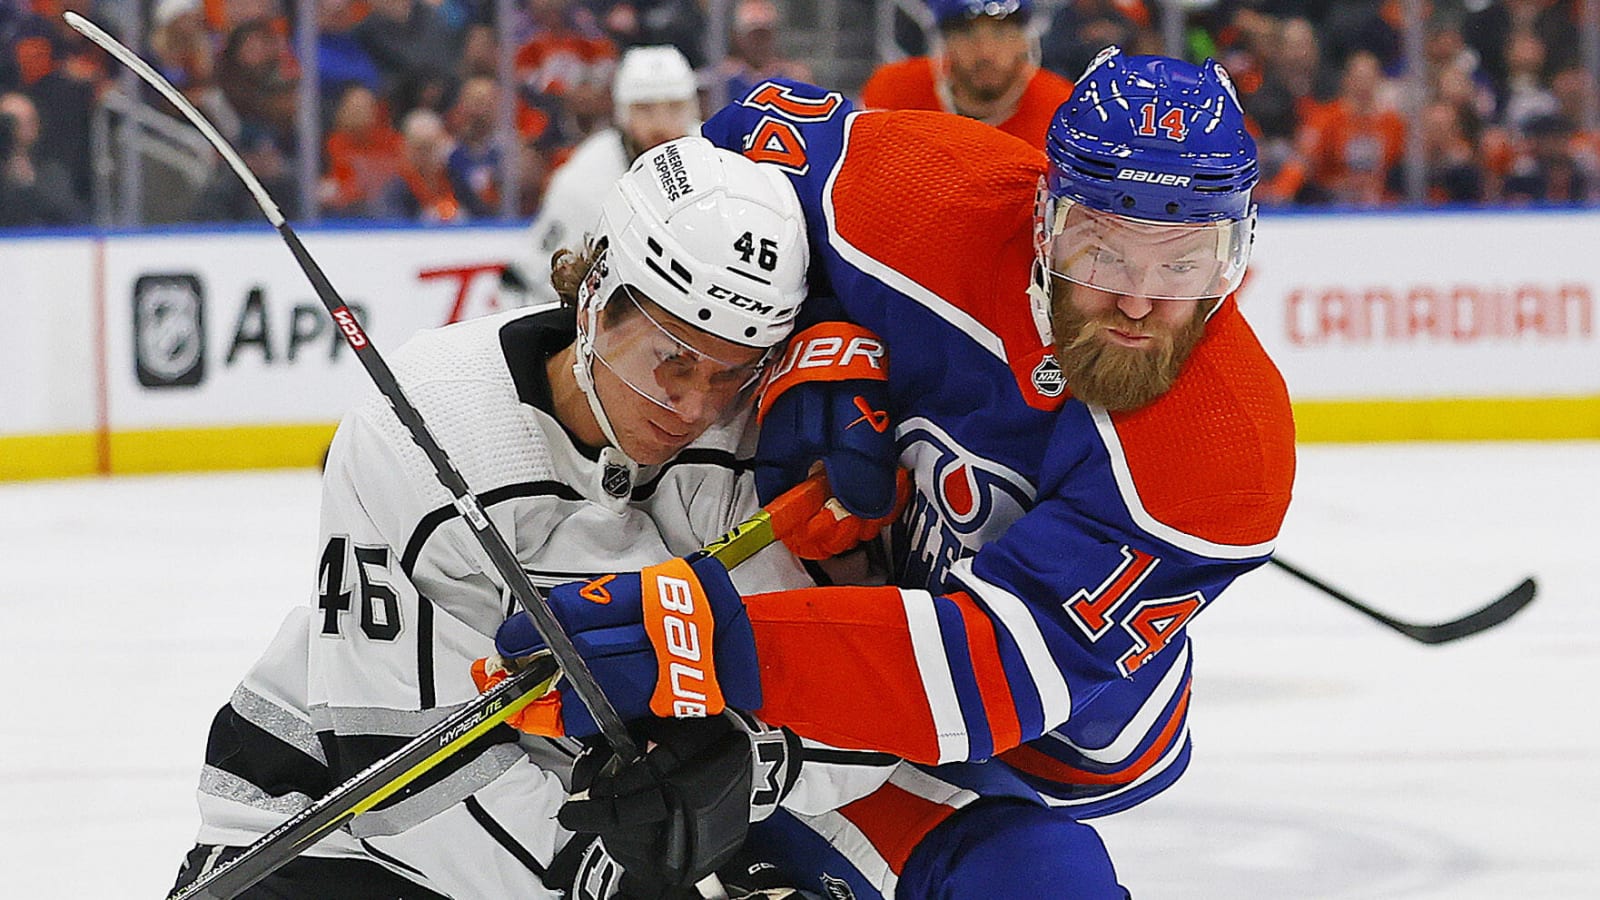 Watch: Edmonton Oilers defenceman Mattias Ekholm delivers a crushing hit on Avalanche’s Mikko Rantanen